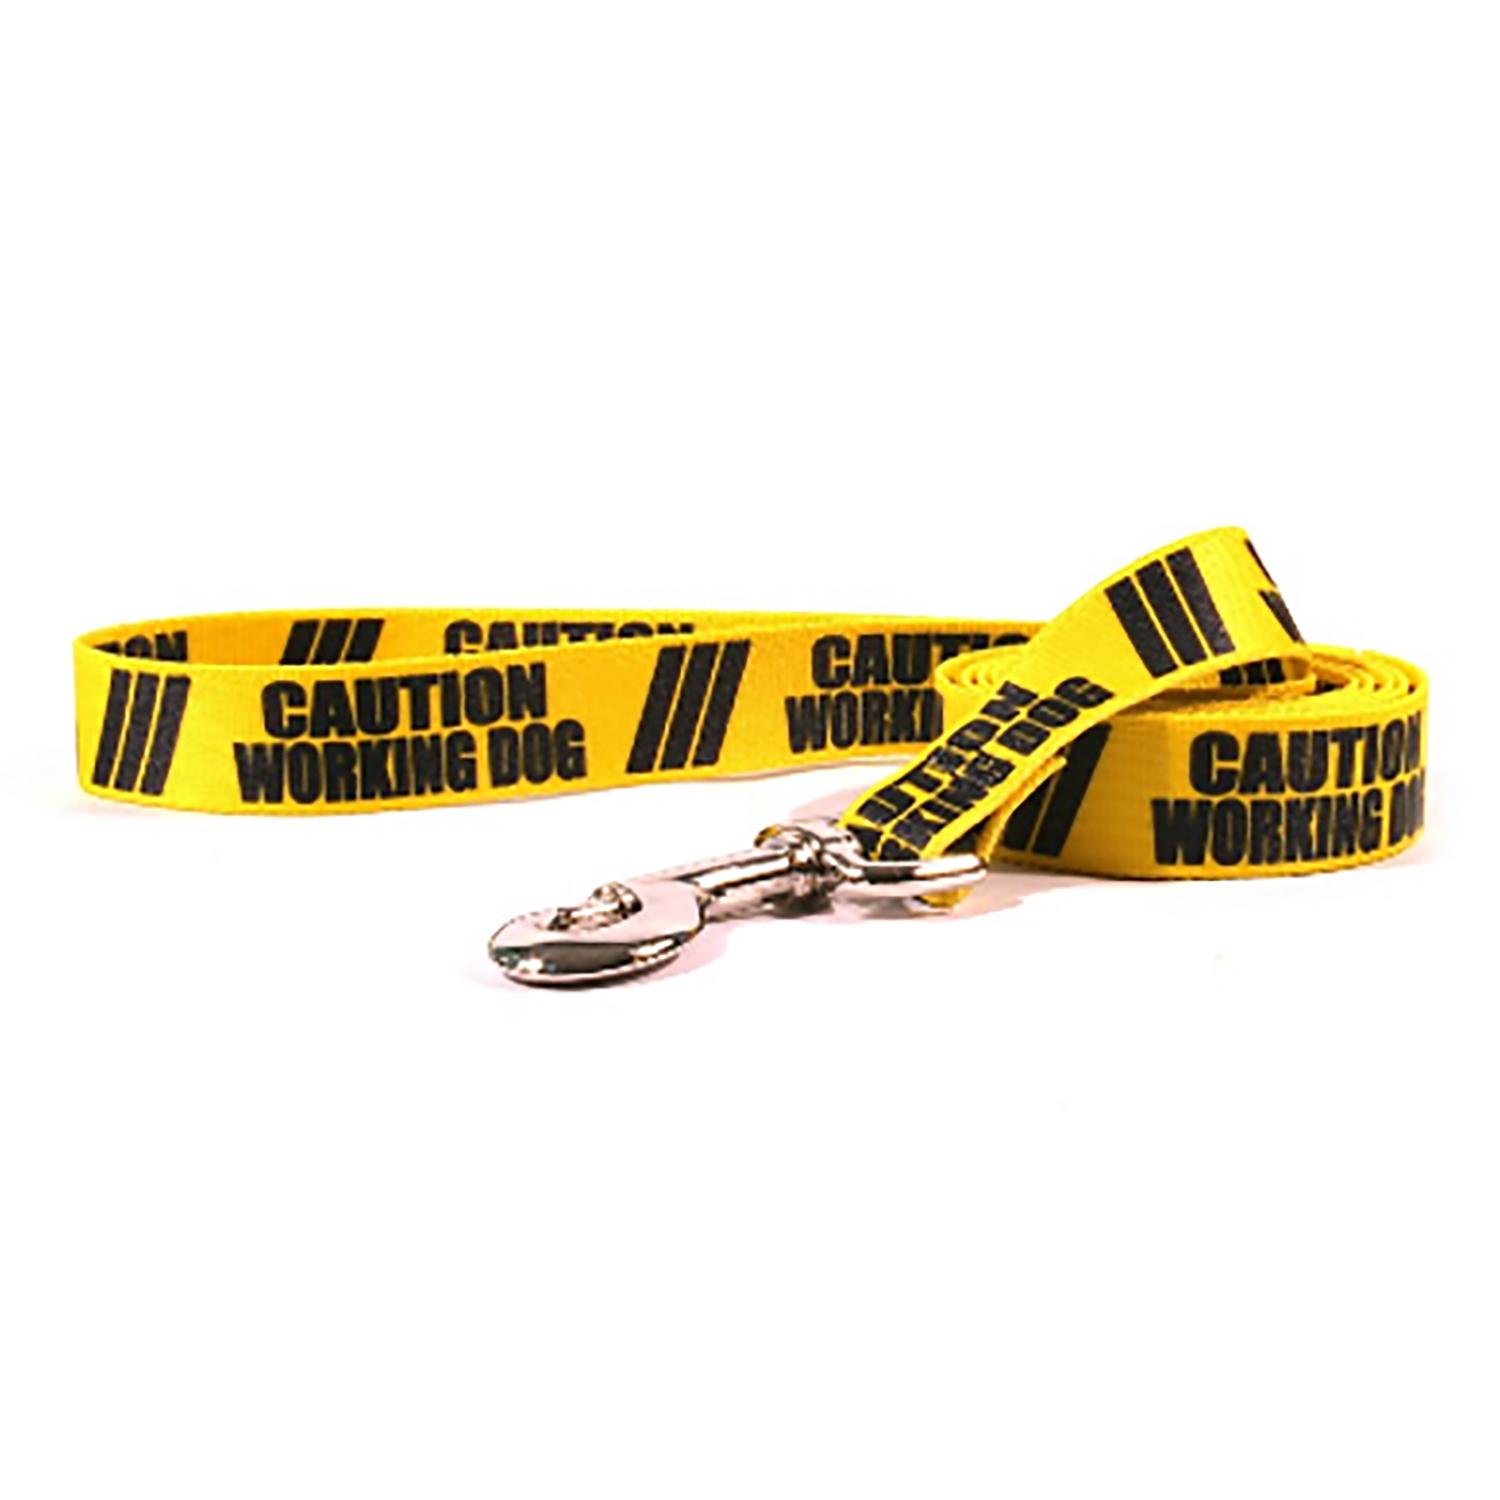 Caution Dog Leash by Yellow Dog - Working Dog